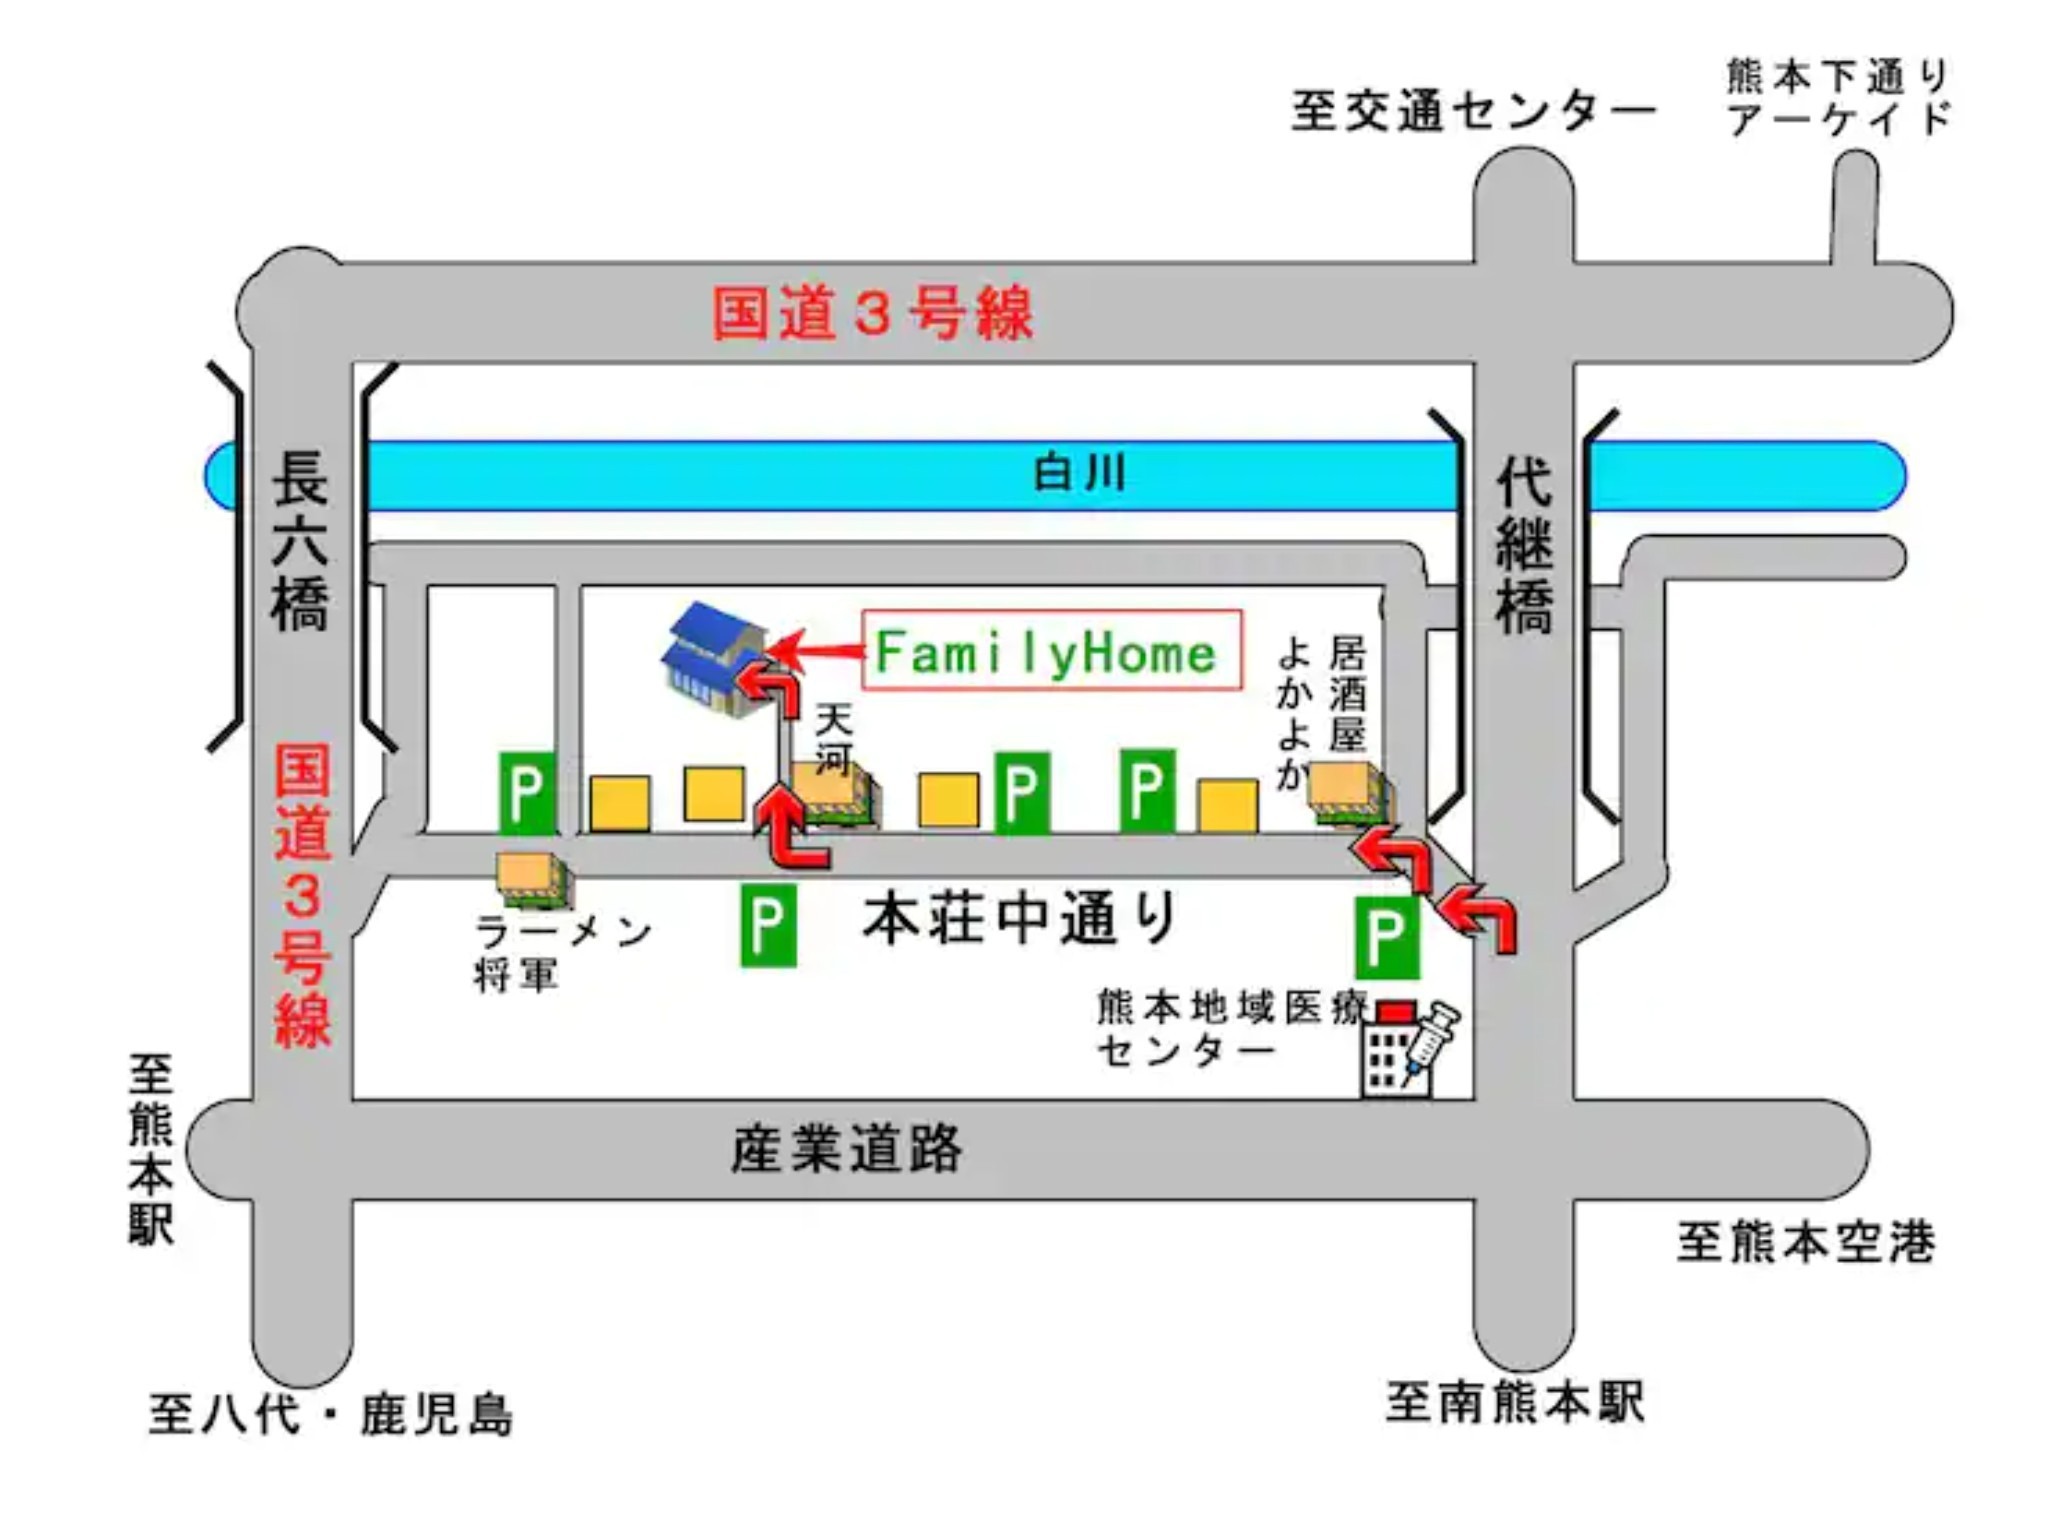 family home 一階洋室、リニューアル快適な区間熊本駅徒歩15分繁華街上下通徒歩8分交通便利